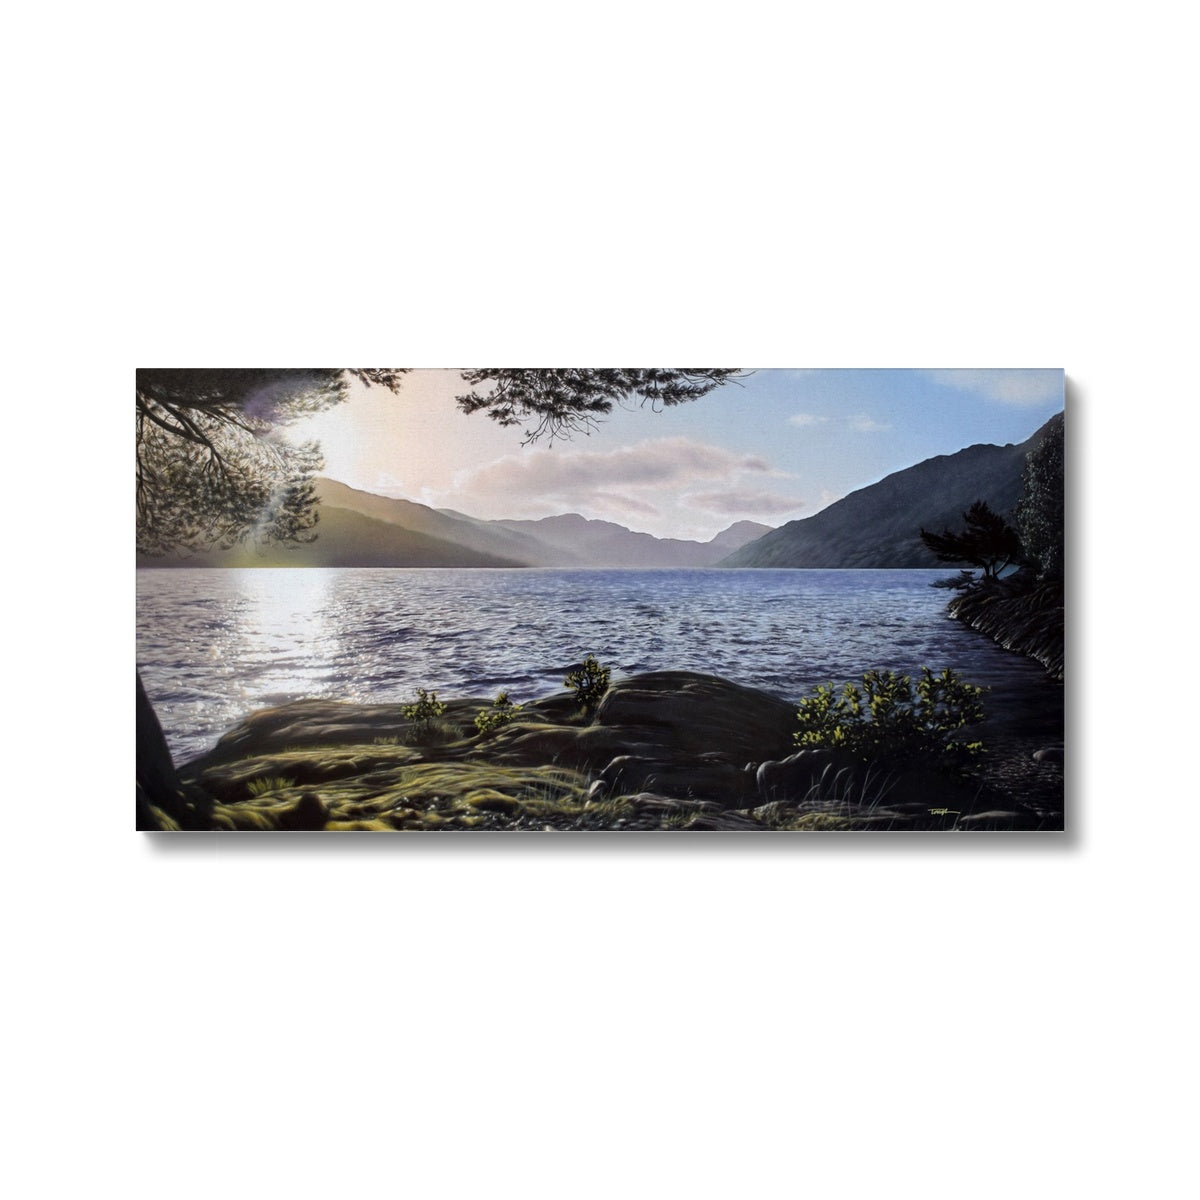 Loch Lomond - Canvas